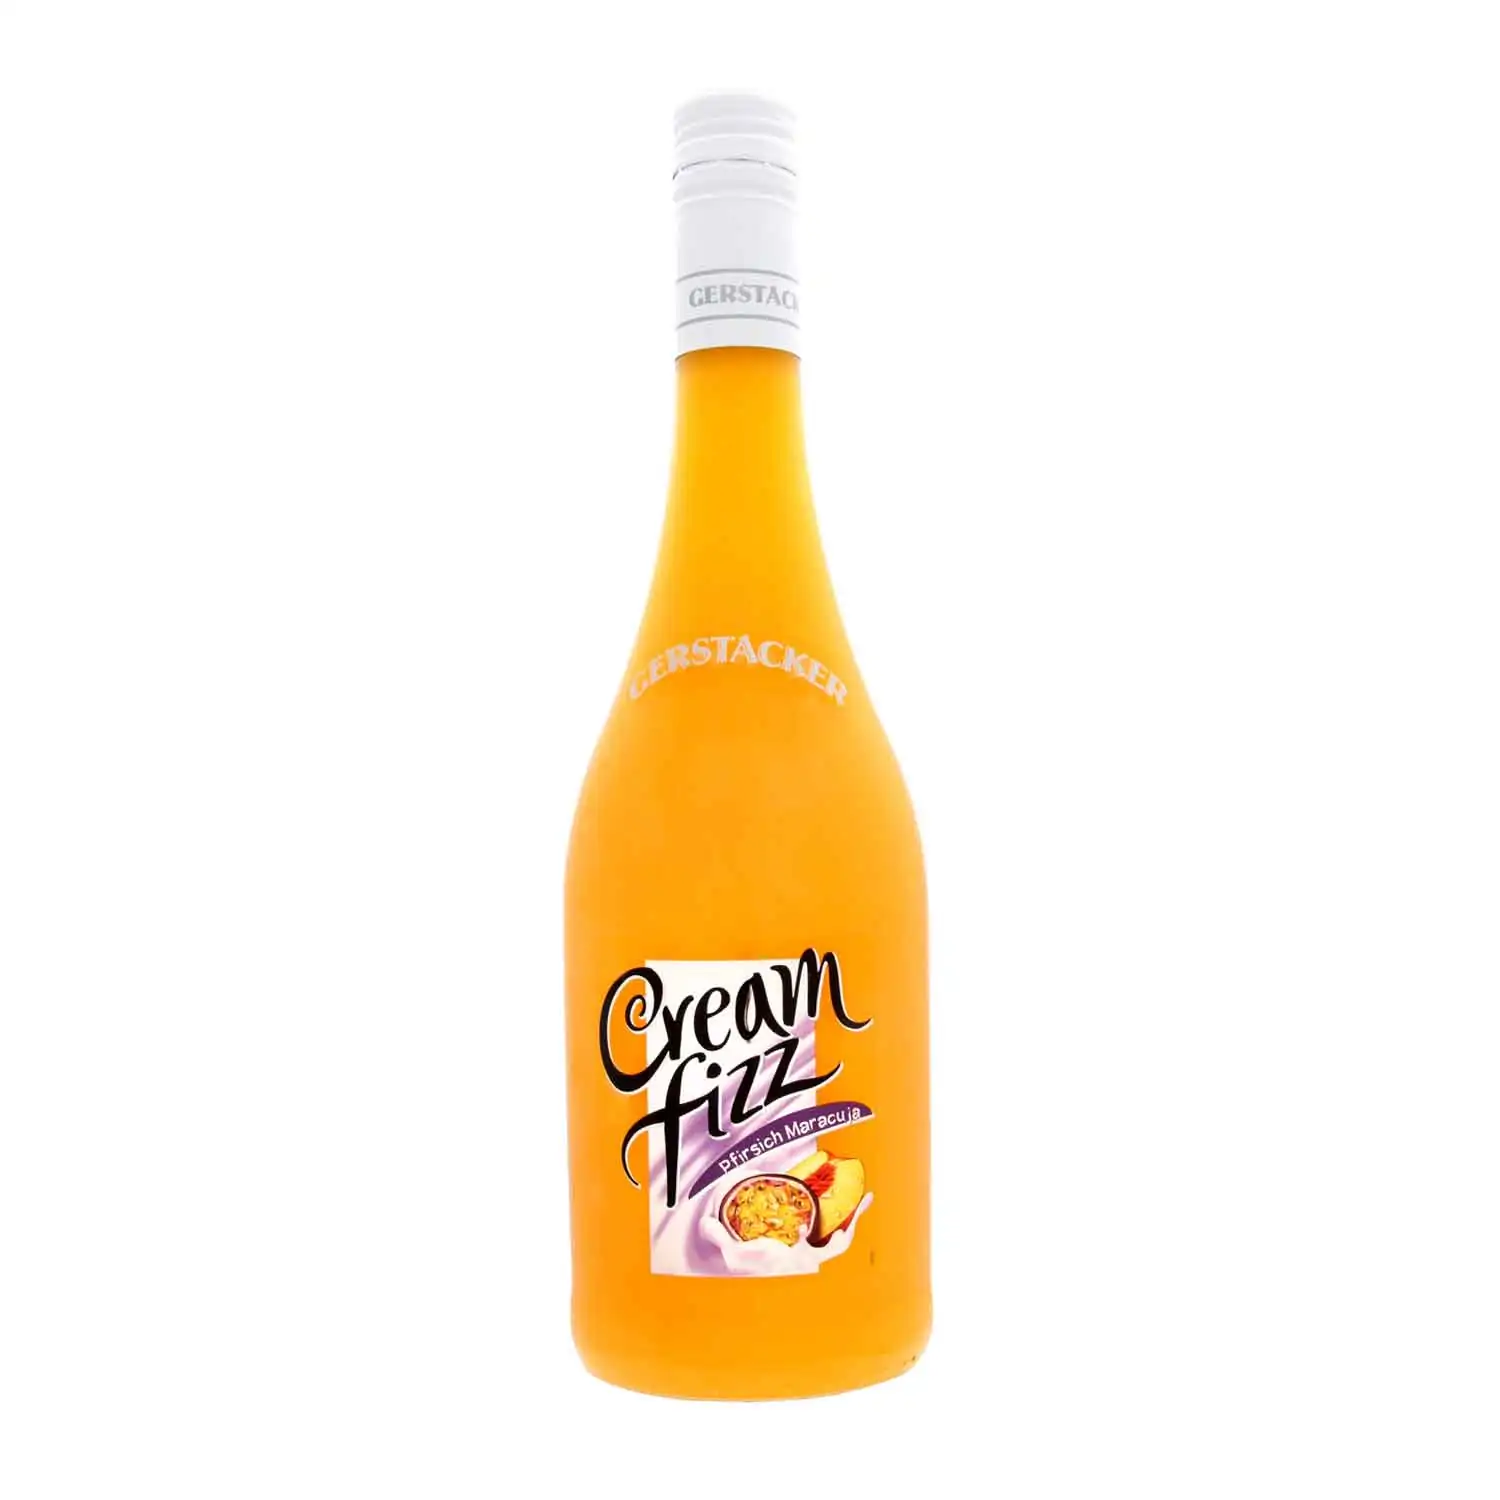 Cream Fizz peach maracuja 75cl Alc 5% - Buy at Real Tobacco